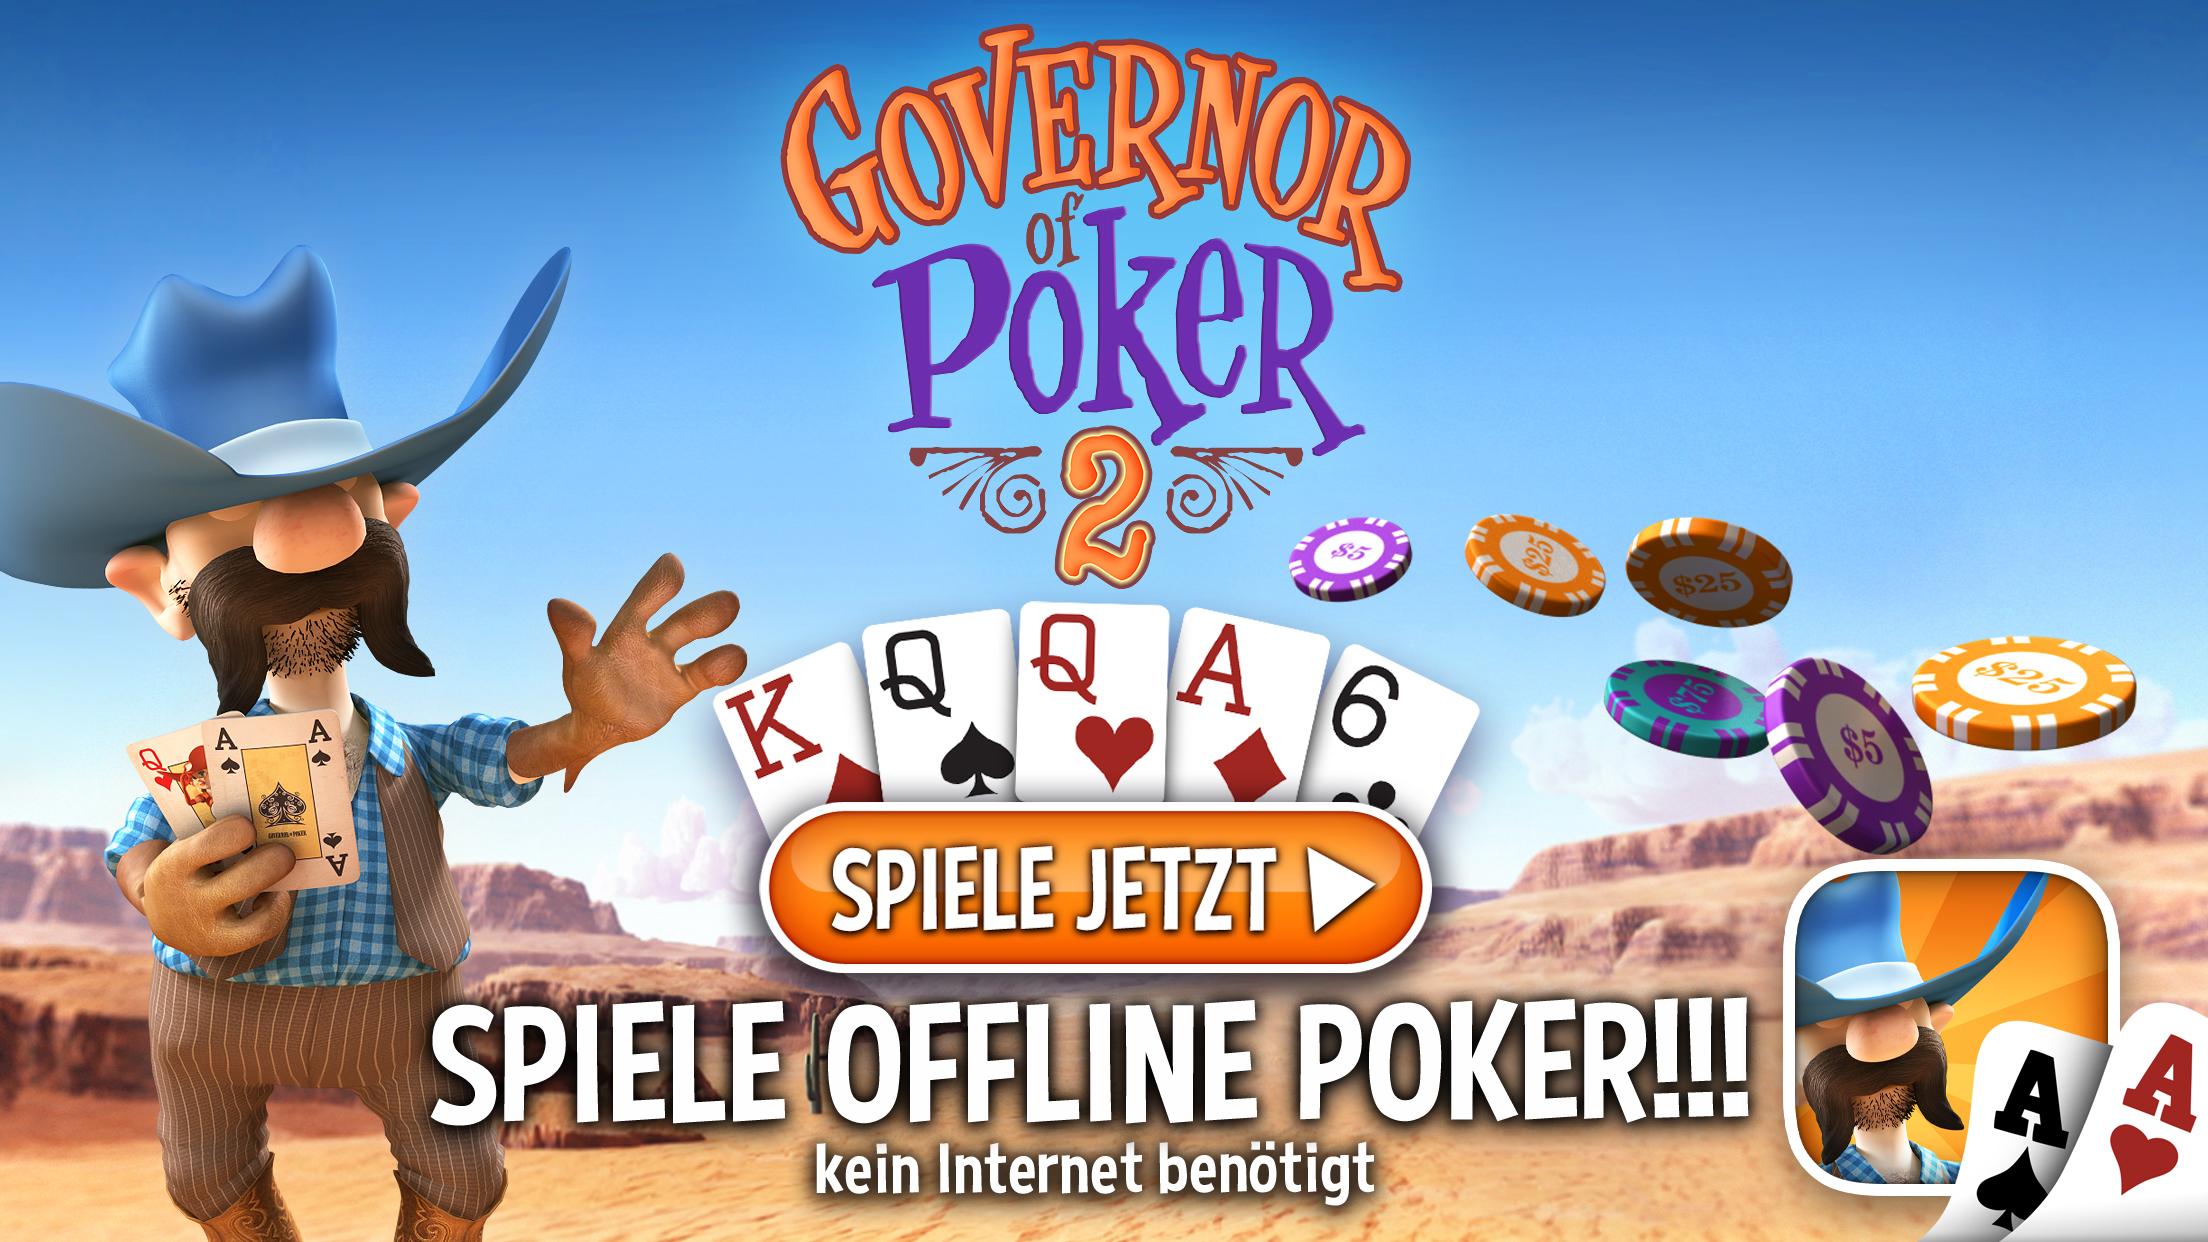 Android application Governor of Poker 2 - Offline screenshort